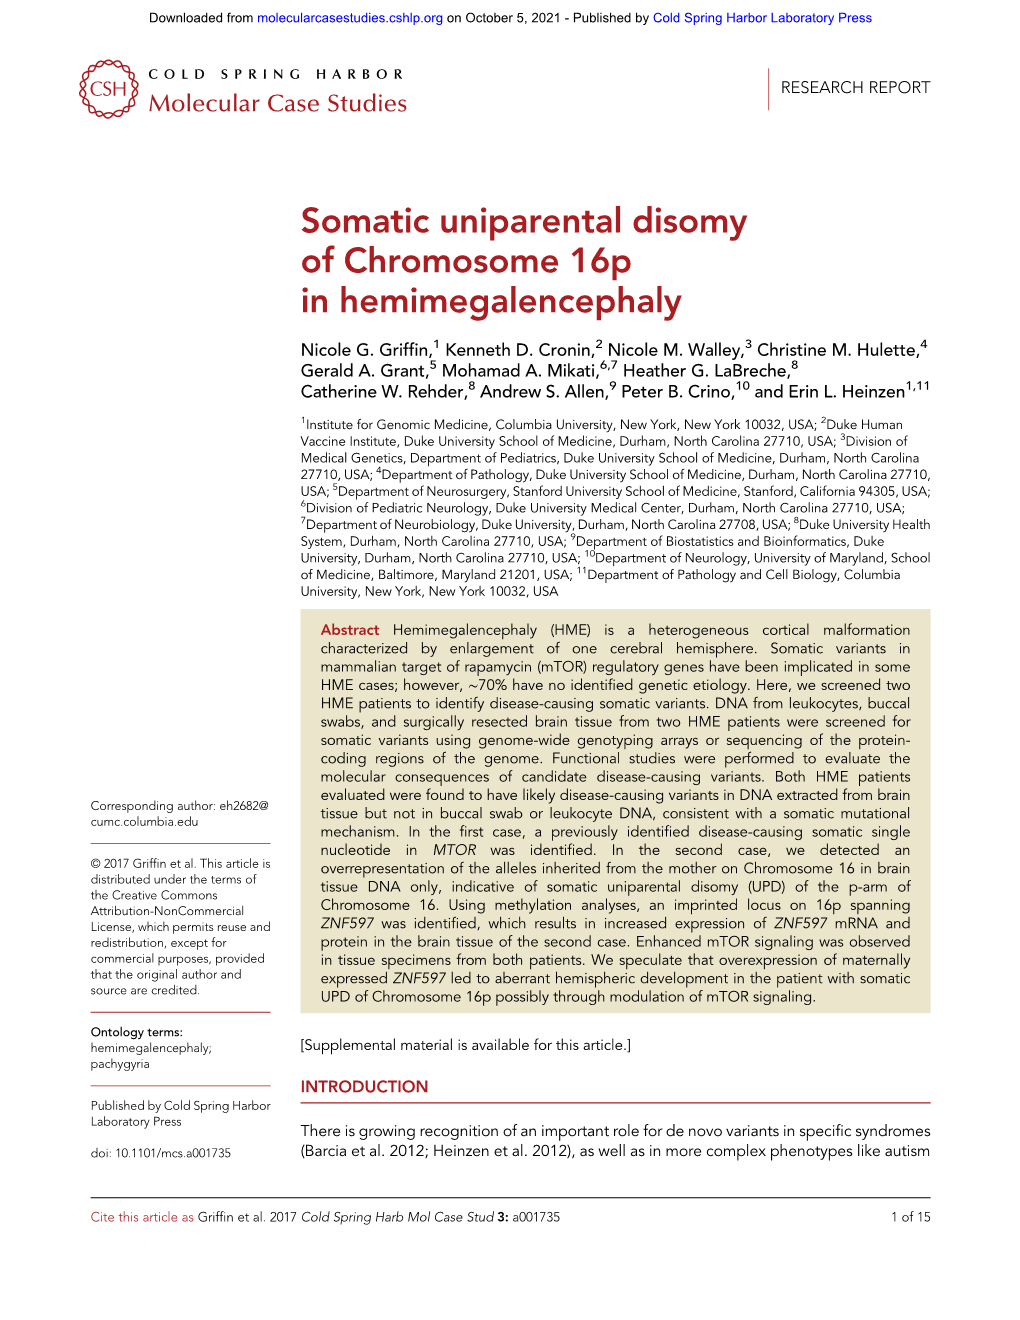 Somatic Uniparental Disomy of Chromosome 16P in Hemimegalencephaly